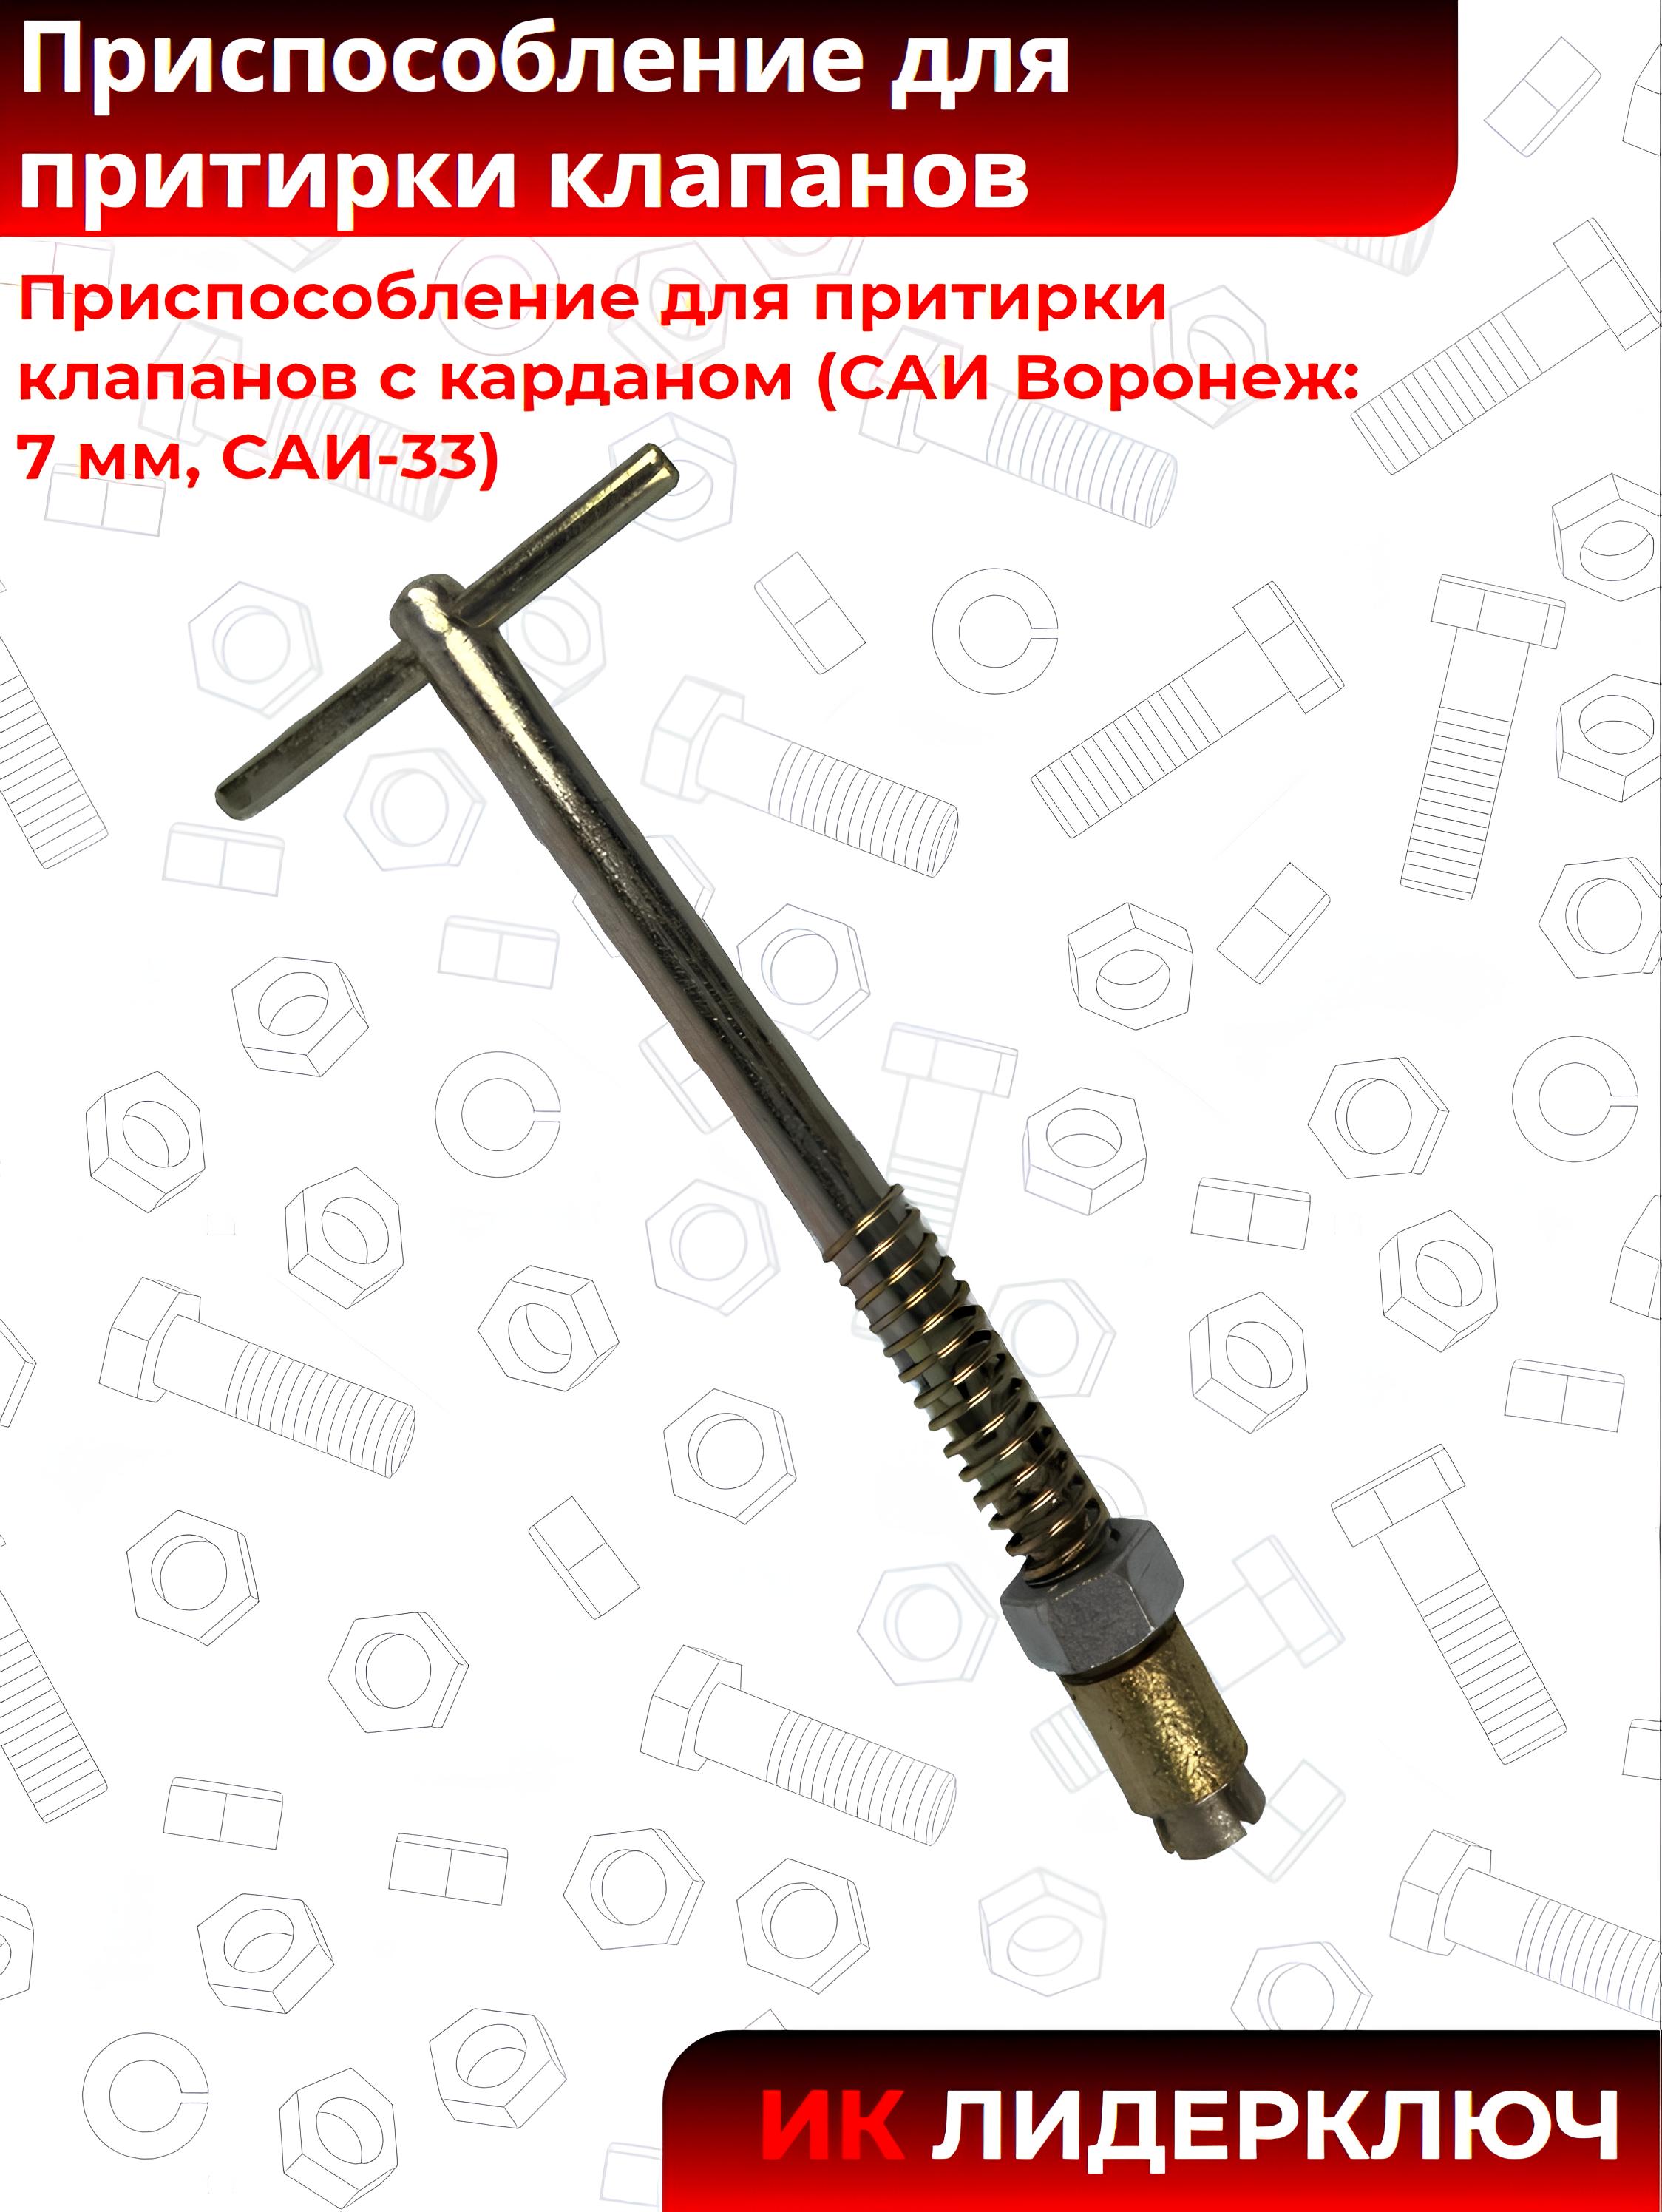 Приспособление для притирки клапанов с карданом (САИ Воронеж: 7 мм, САИ-33)